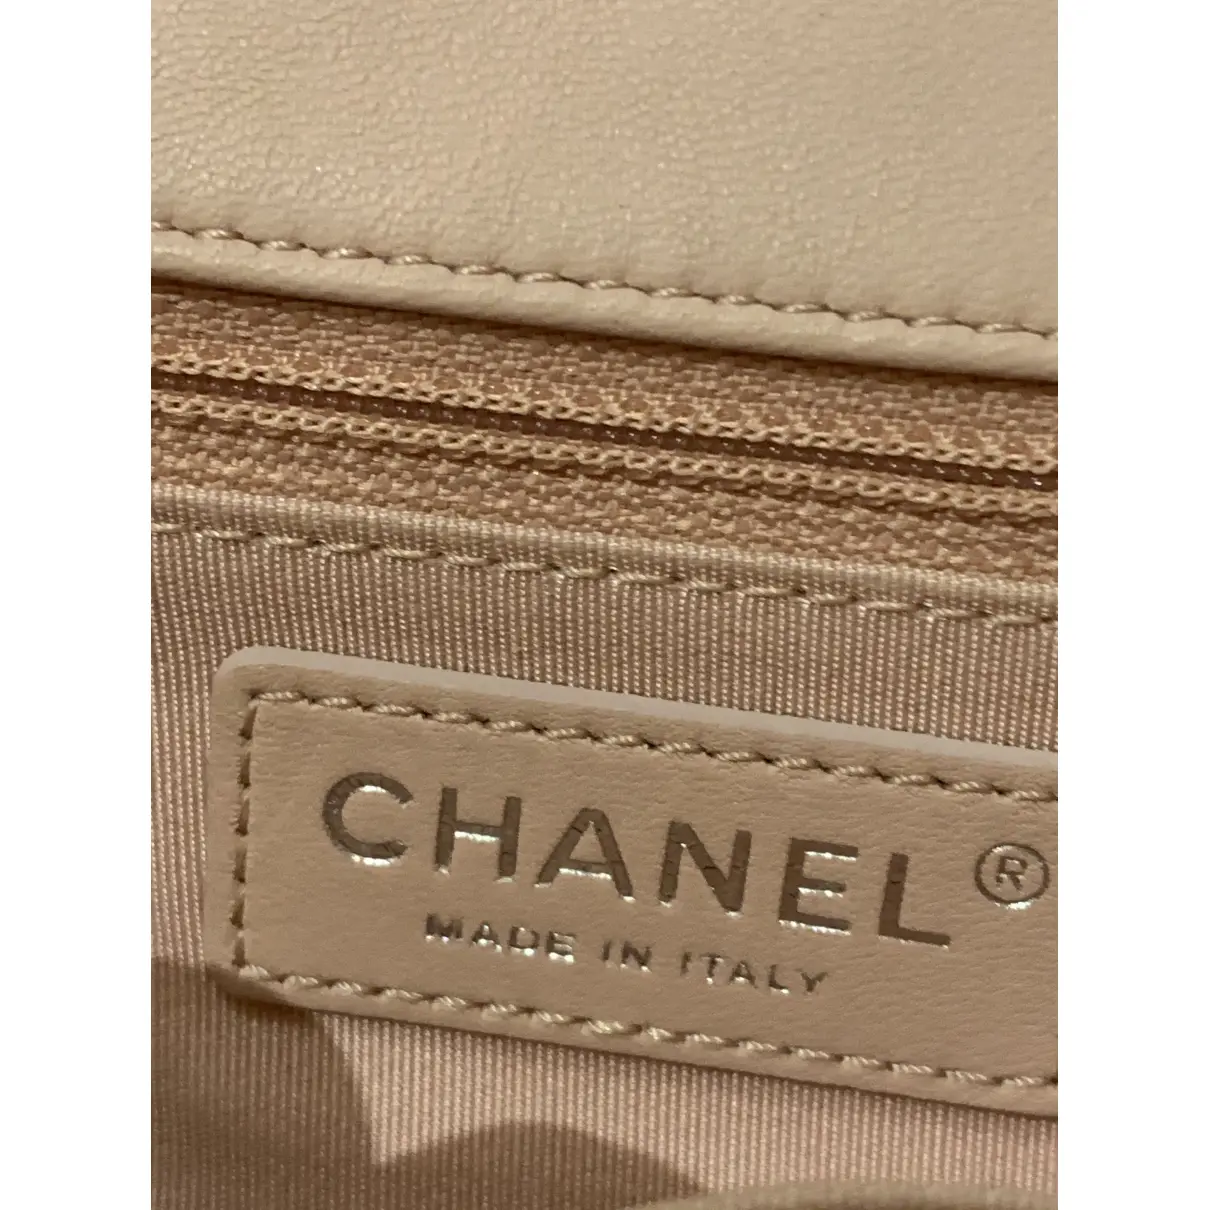 Timeless/Classique tweed handbag Chanel